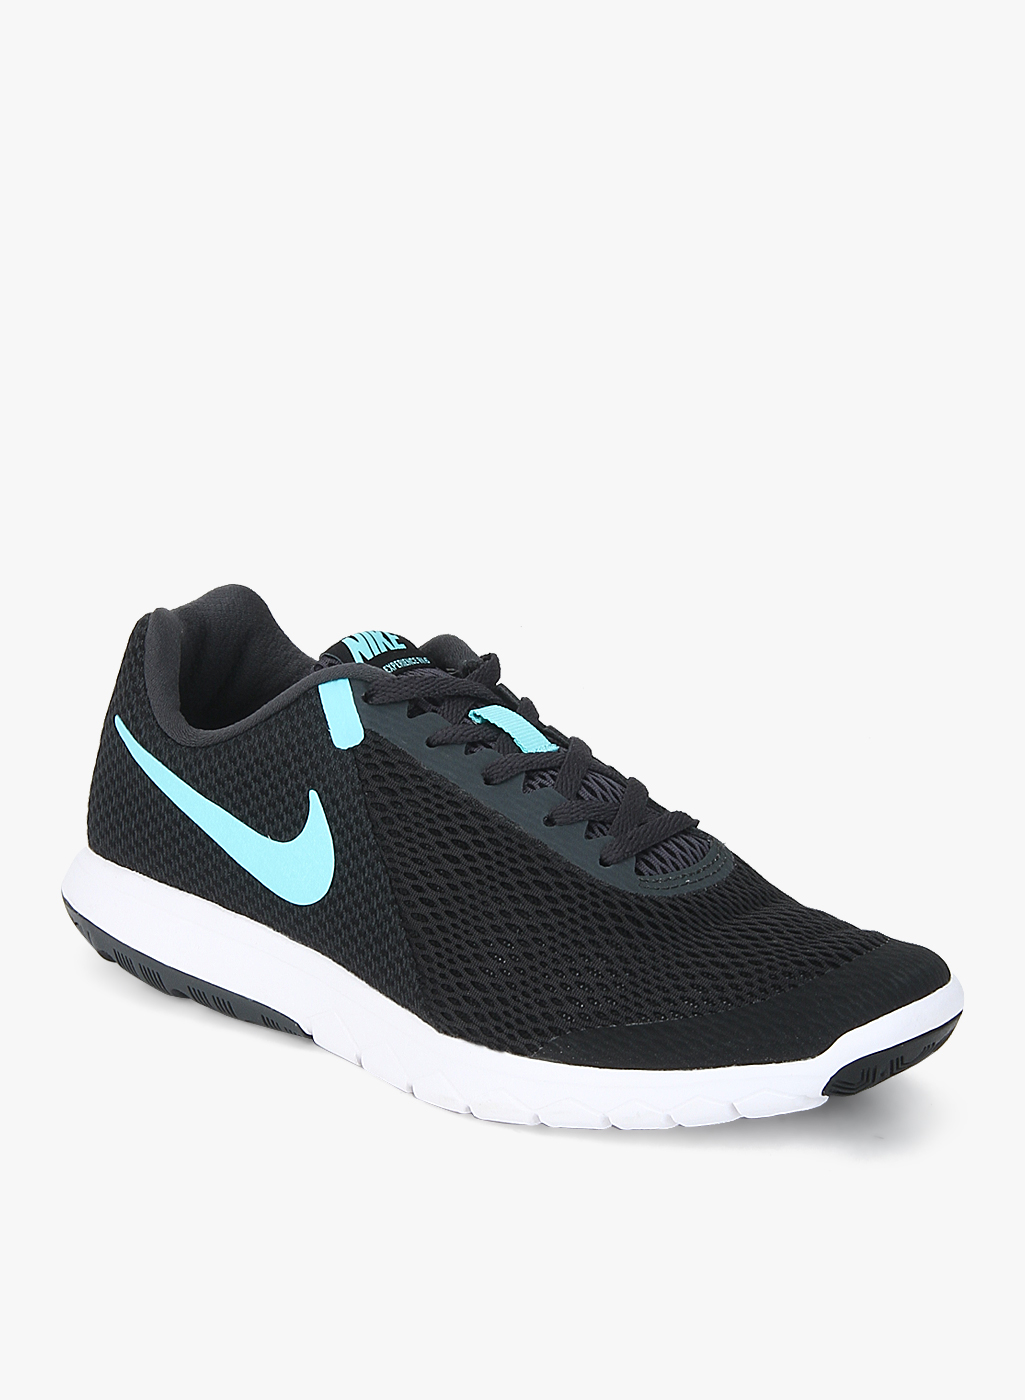 Buy Nike Womens Flex Experience Rn 6 Black Running Shoes Online